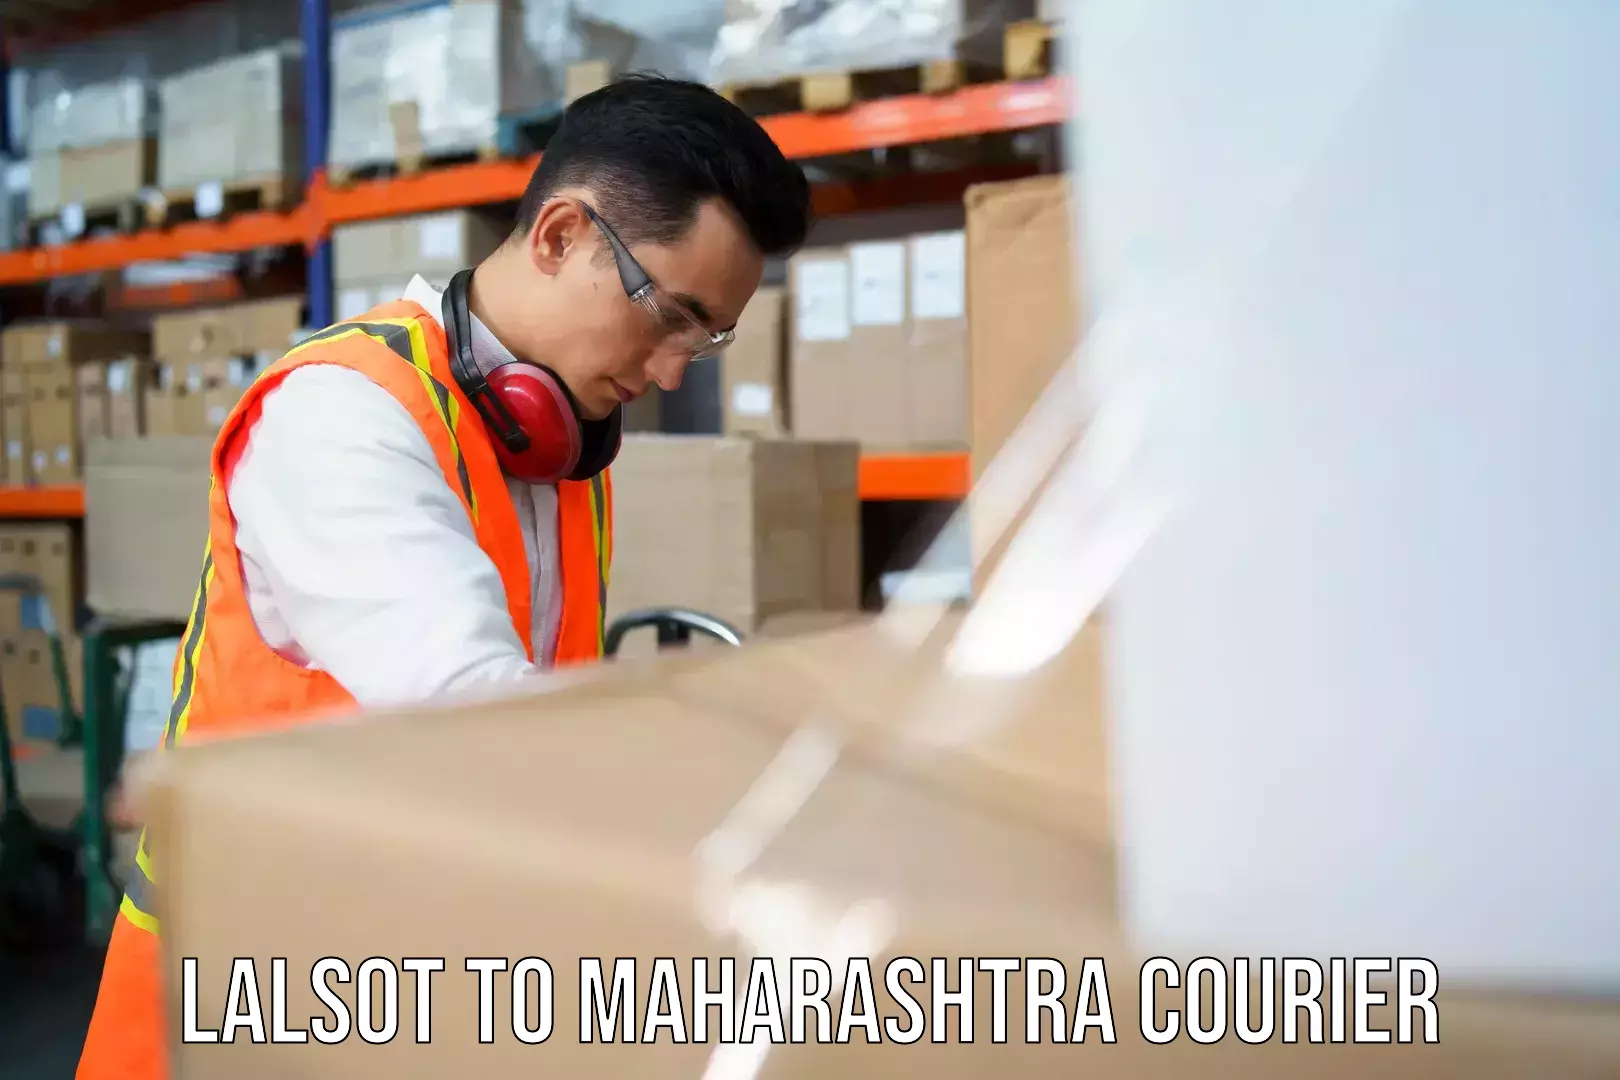 Nationwide shipping coverage Lalsot to Maharashtra